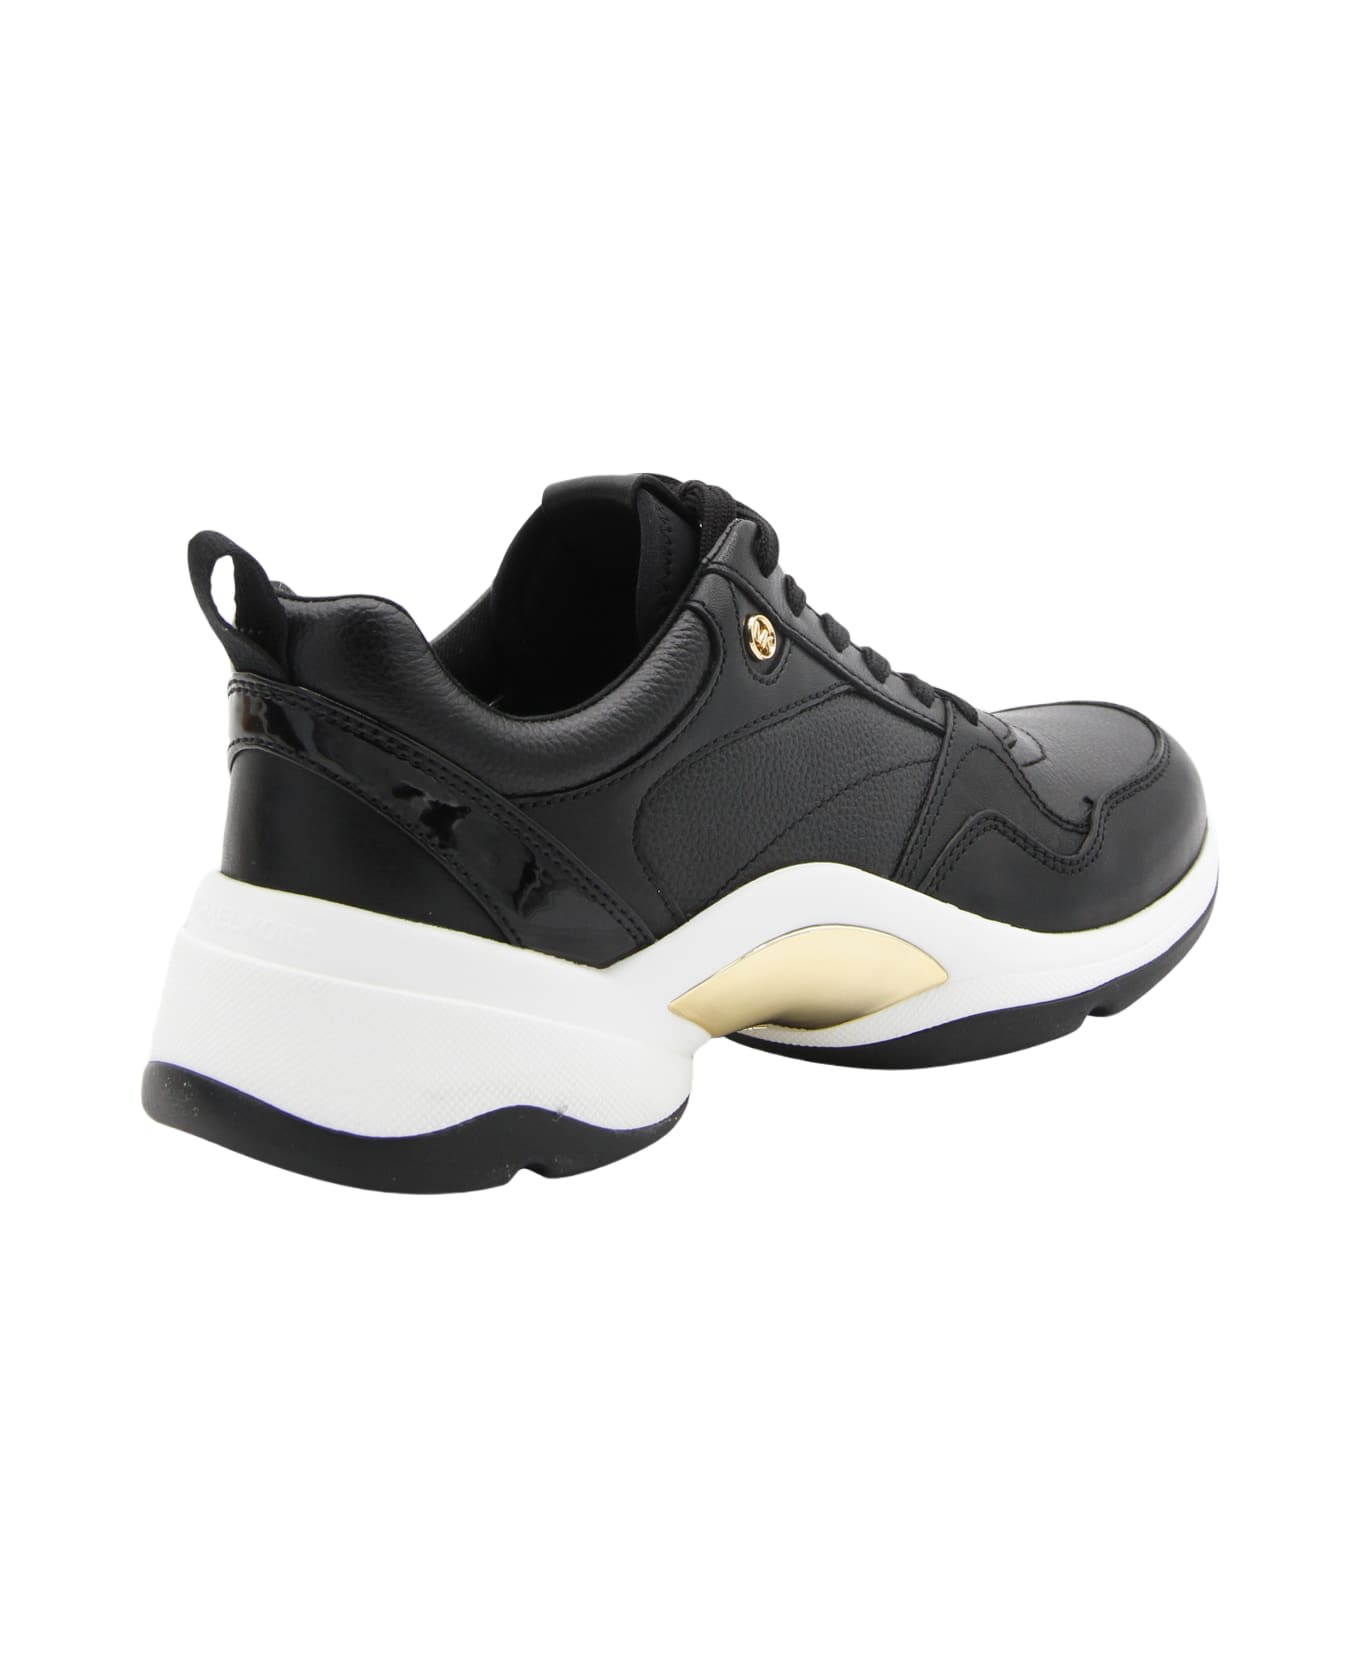 MICHAEL Michael Kors Black Leather Orion Trainer Sneakers - Black